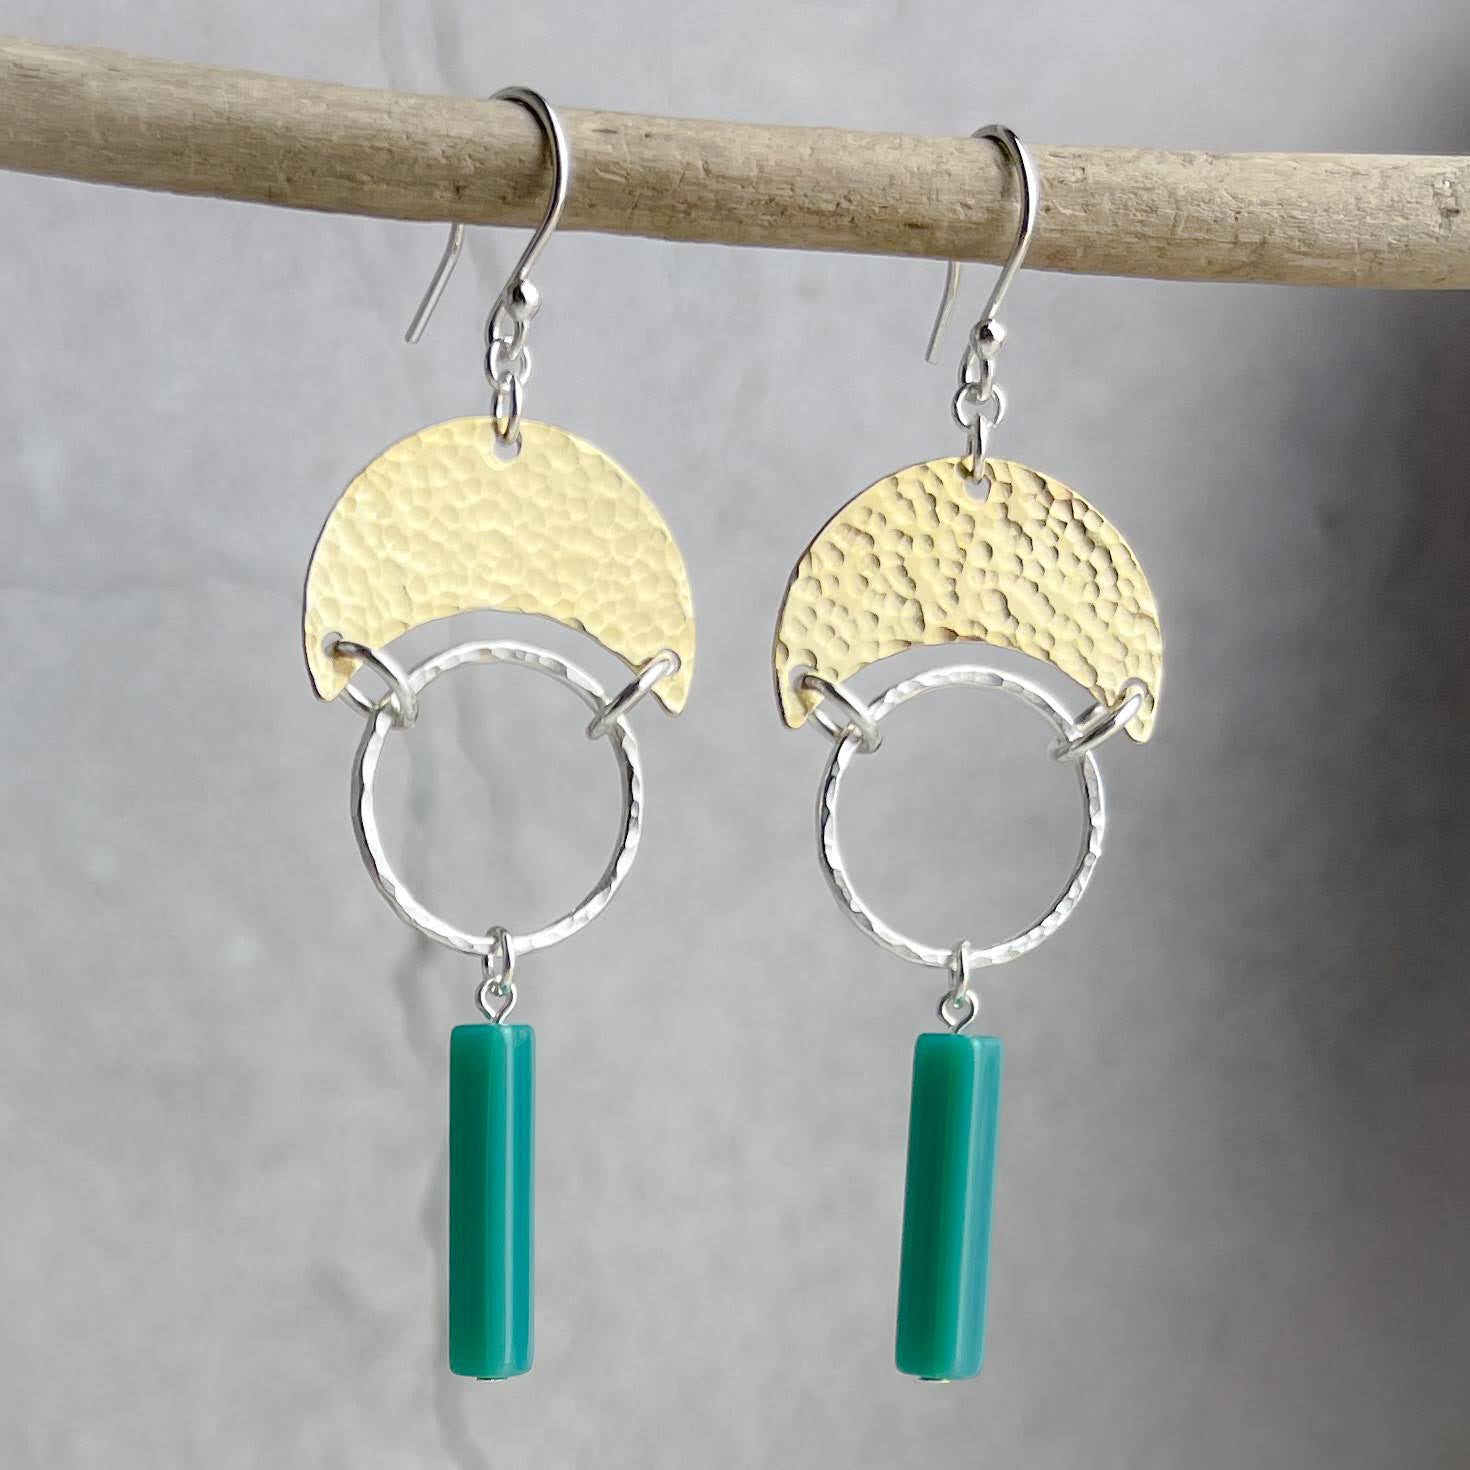 Brass Crescent Moon Drop Earrings - The Nancy Smillie Shop - Art, Jewellery & Designer Gifts Glasgow